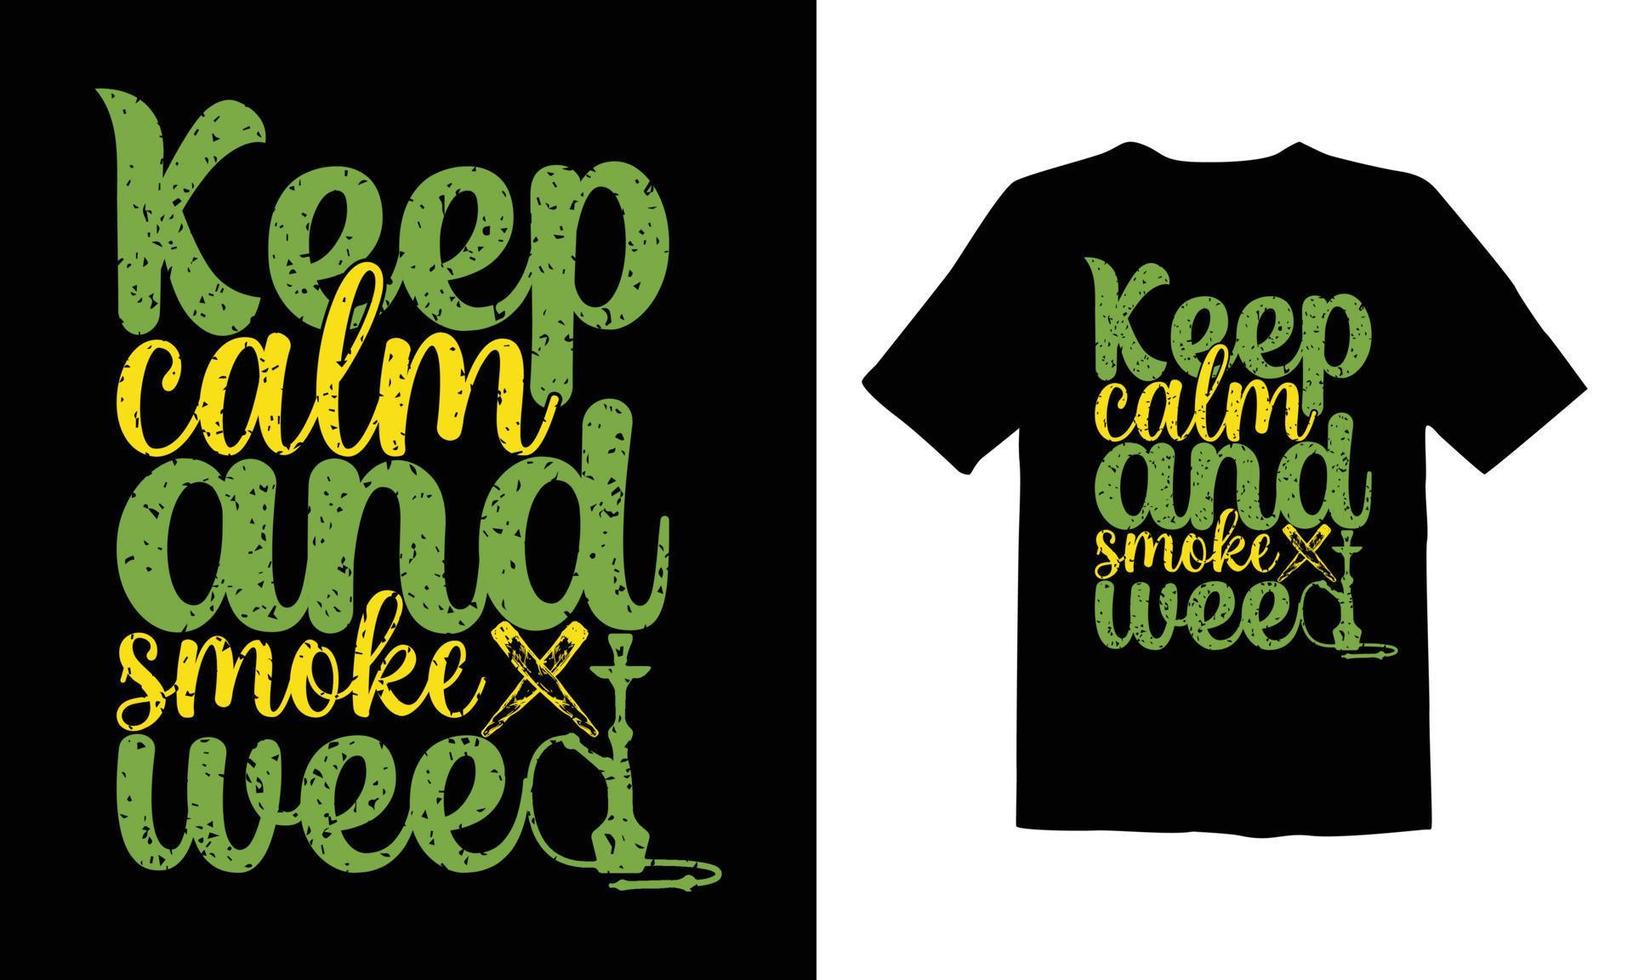 Unkraut, Cannabis-T-Shirt-Design vektor